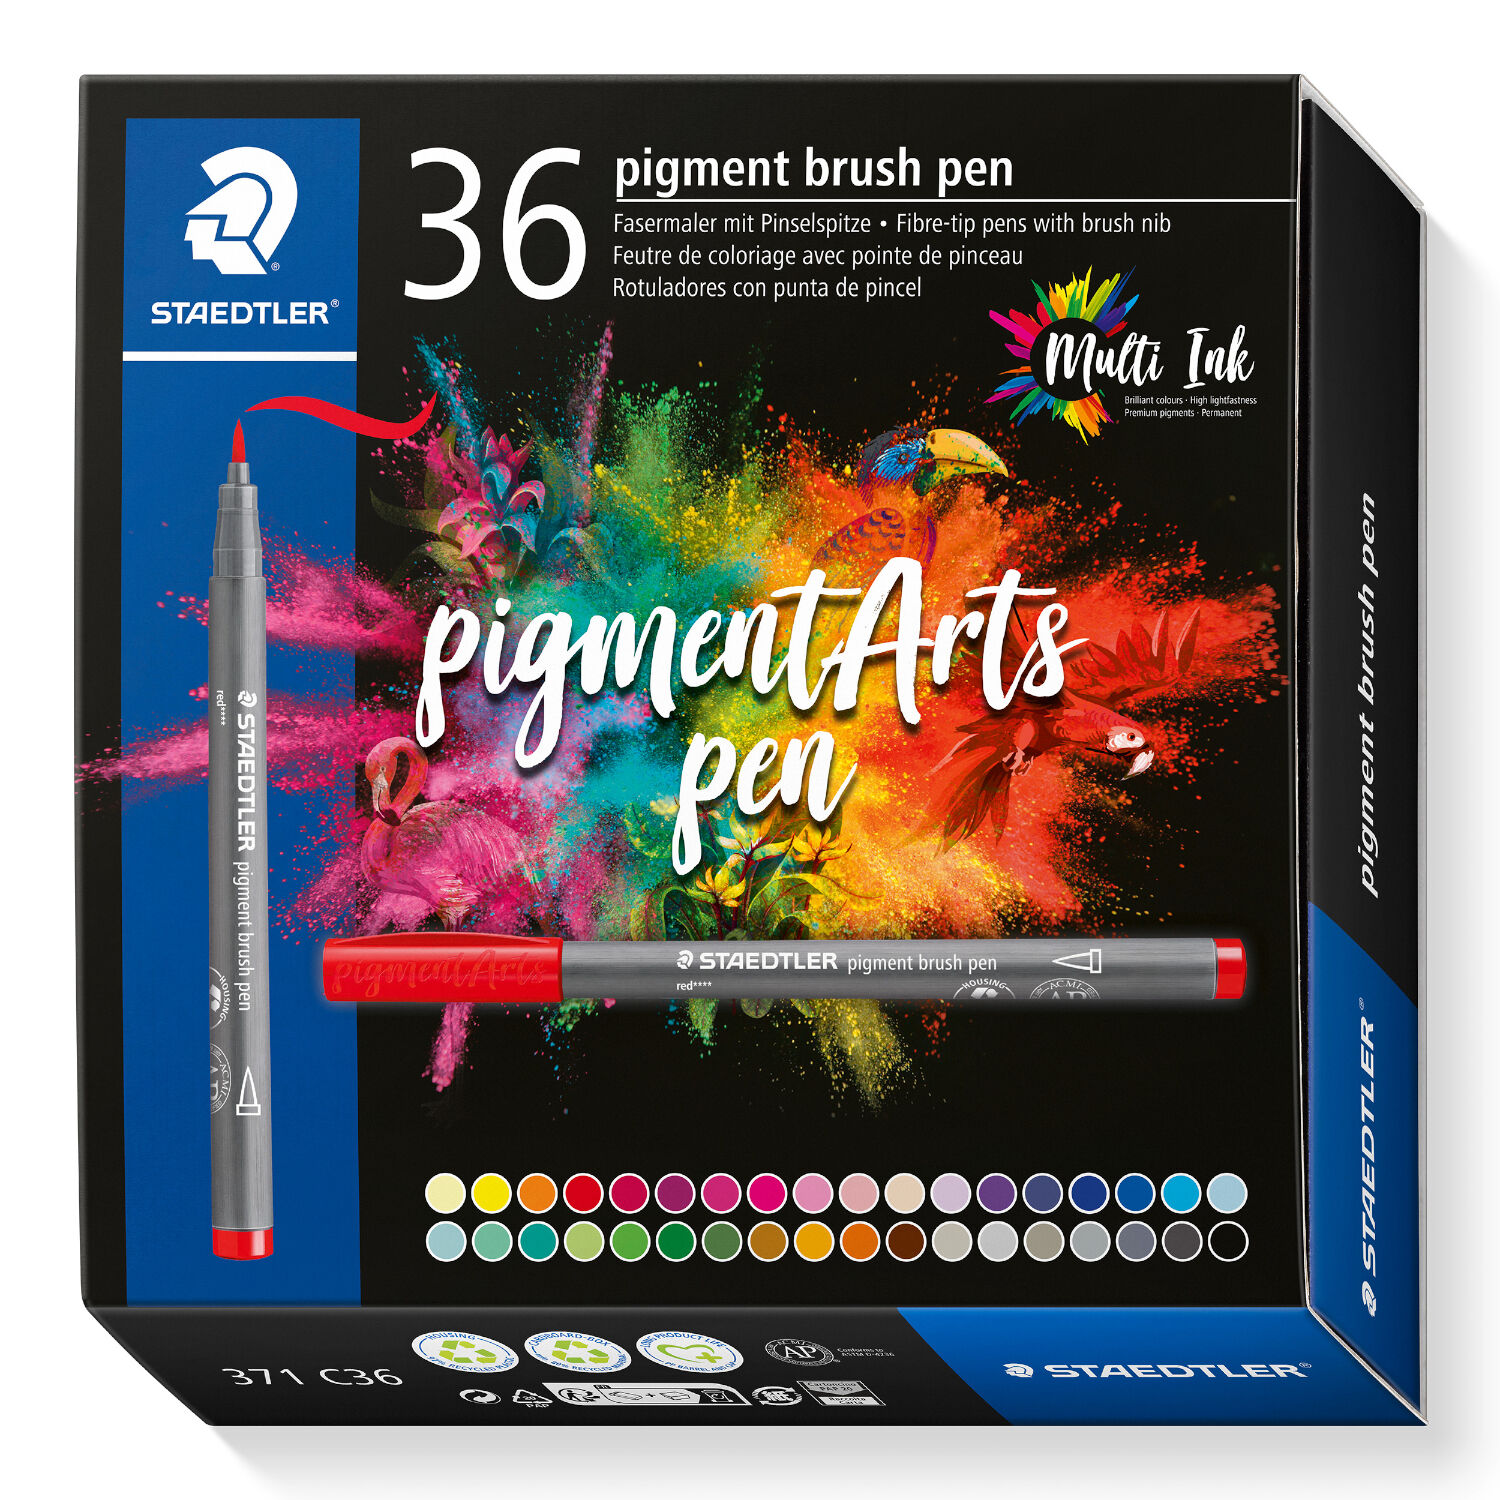 NEU Staedtler Pigment Brush Pen Set, 36 Stifte